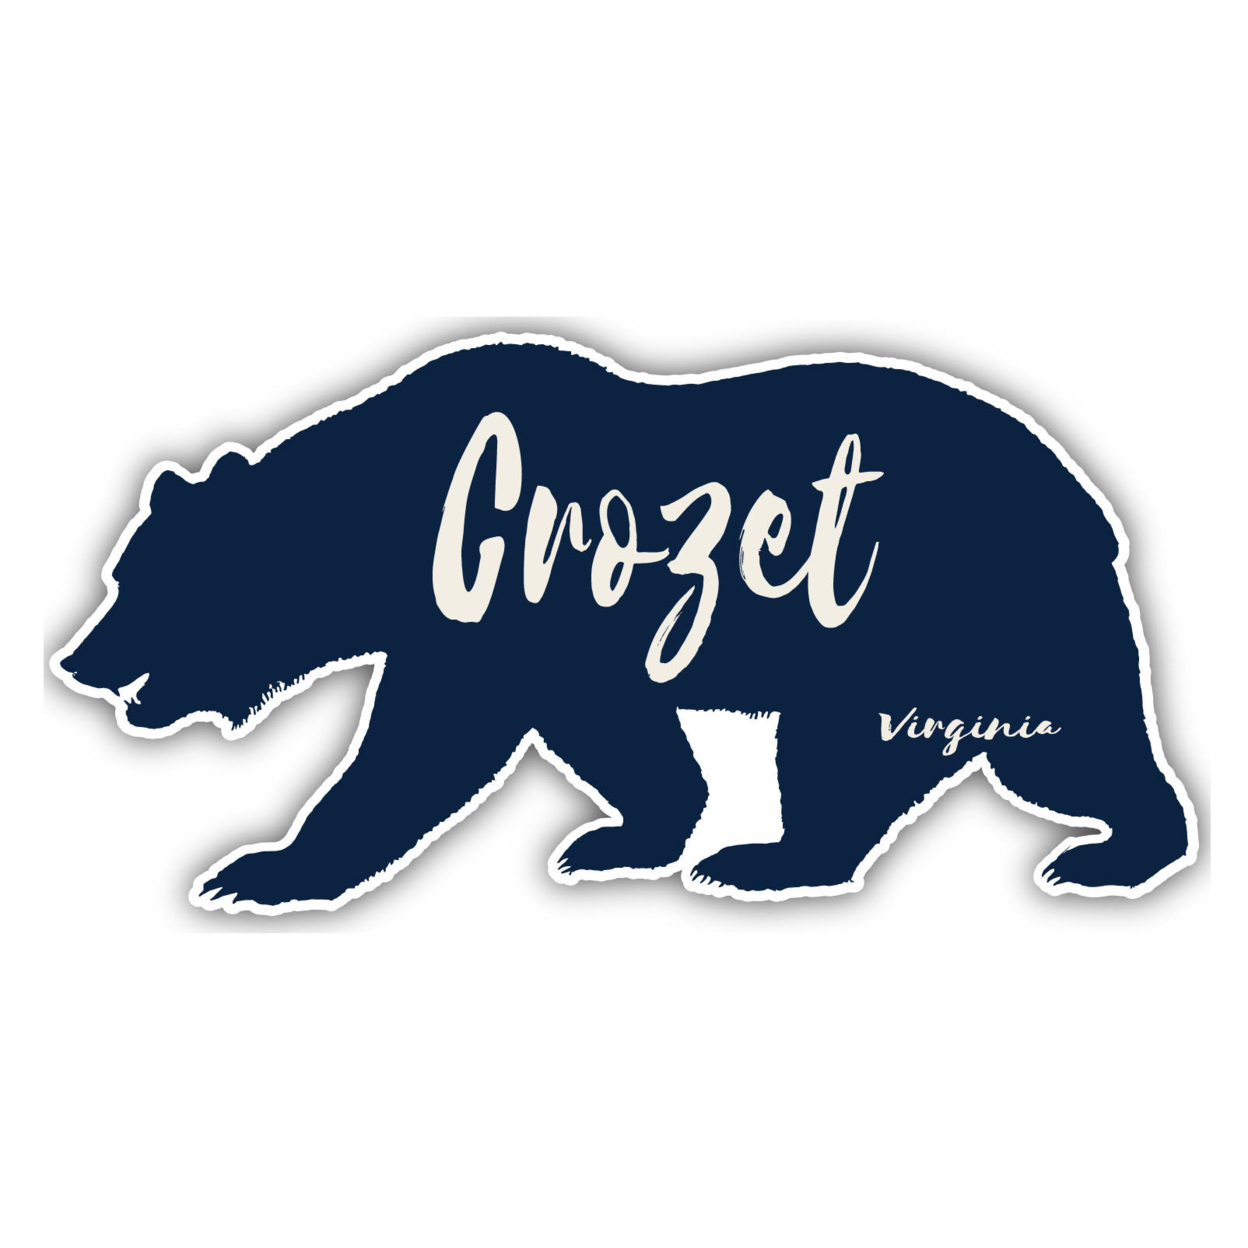 Crozet Virginia Souvenir Decorative Stickers (Choose Theme And Size) - Single Unit, 6-Inch, Bear